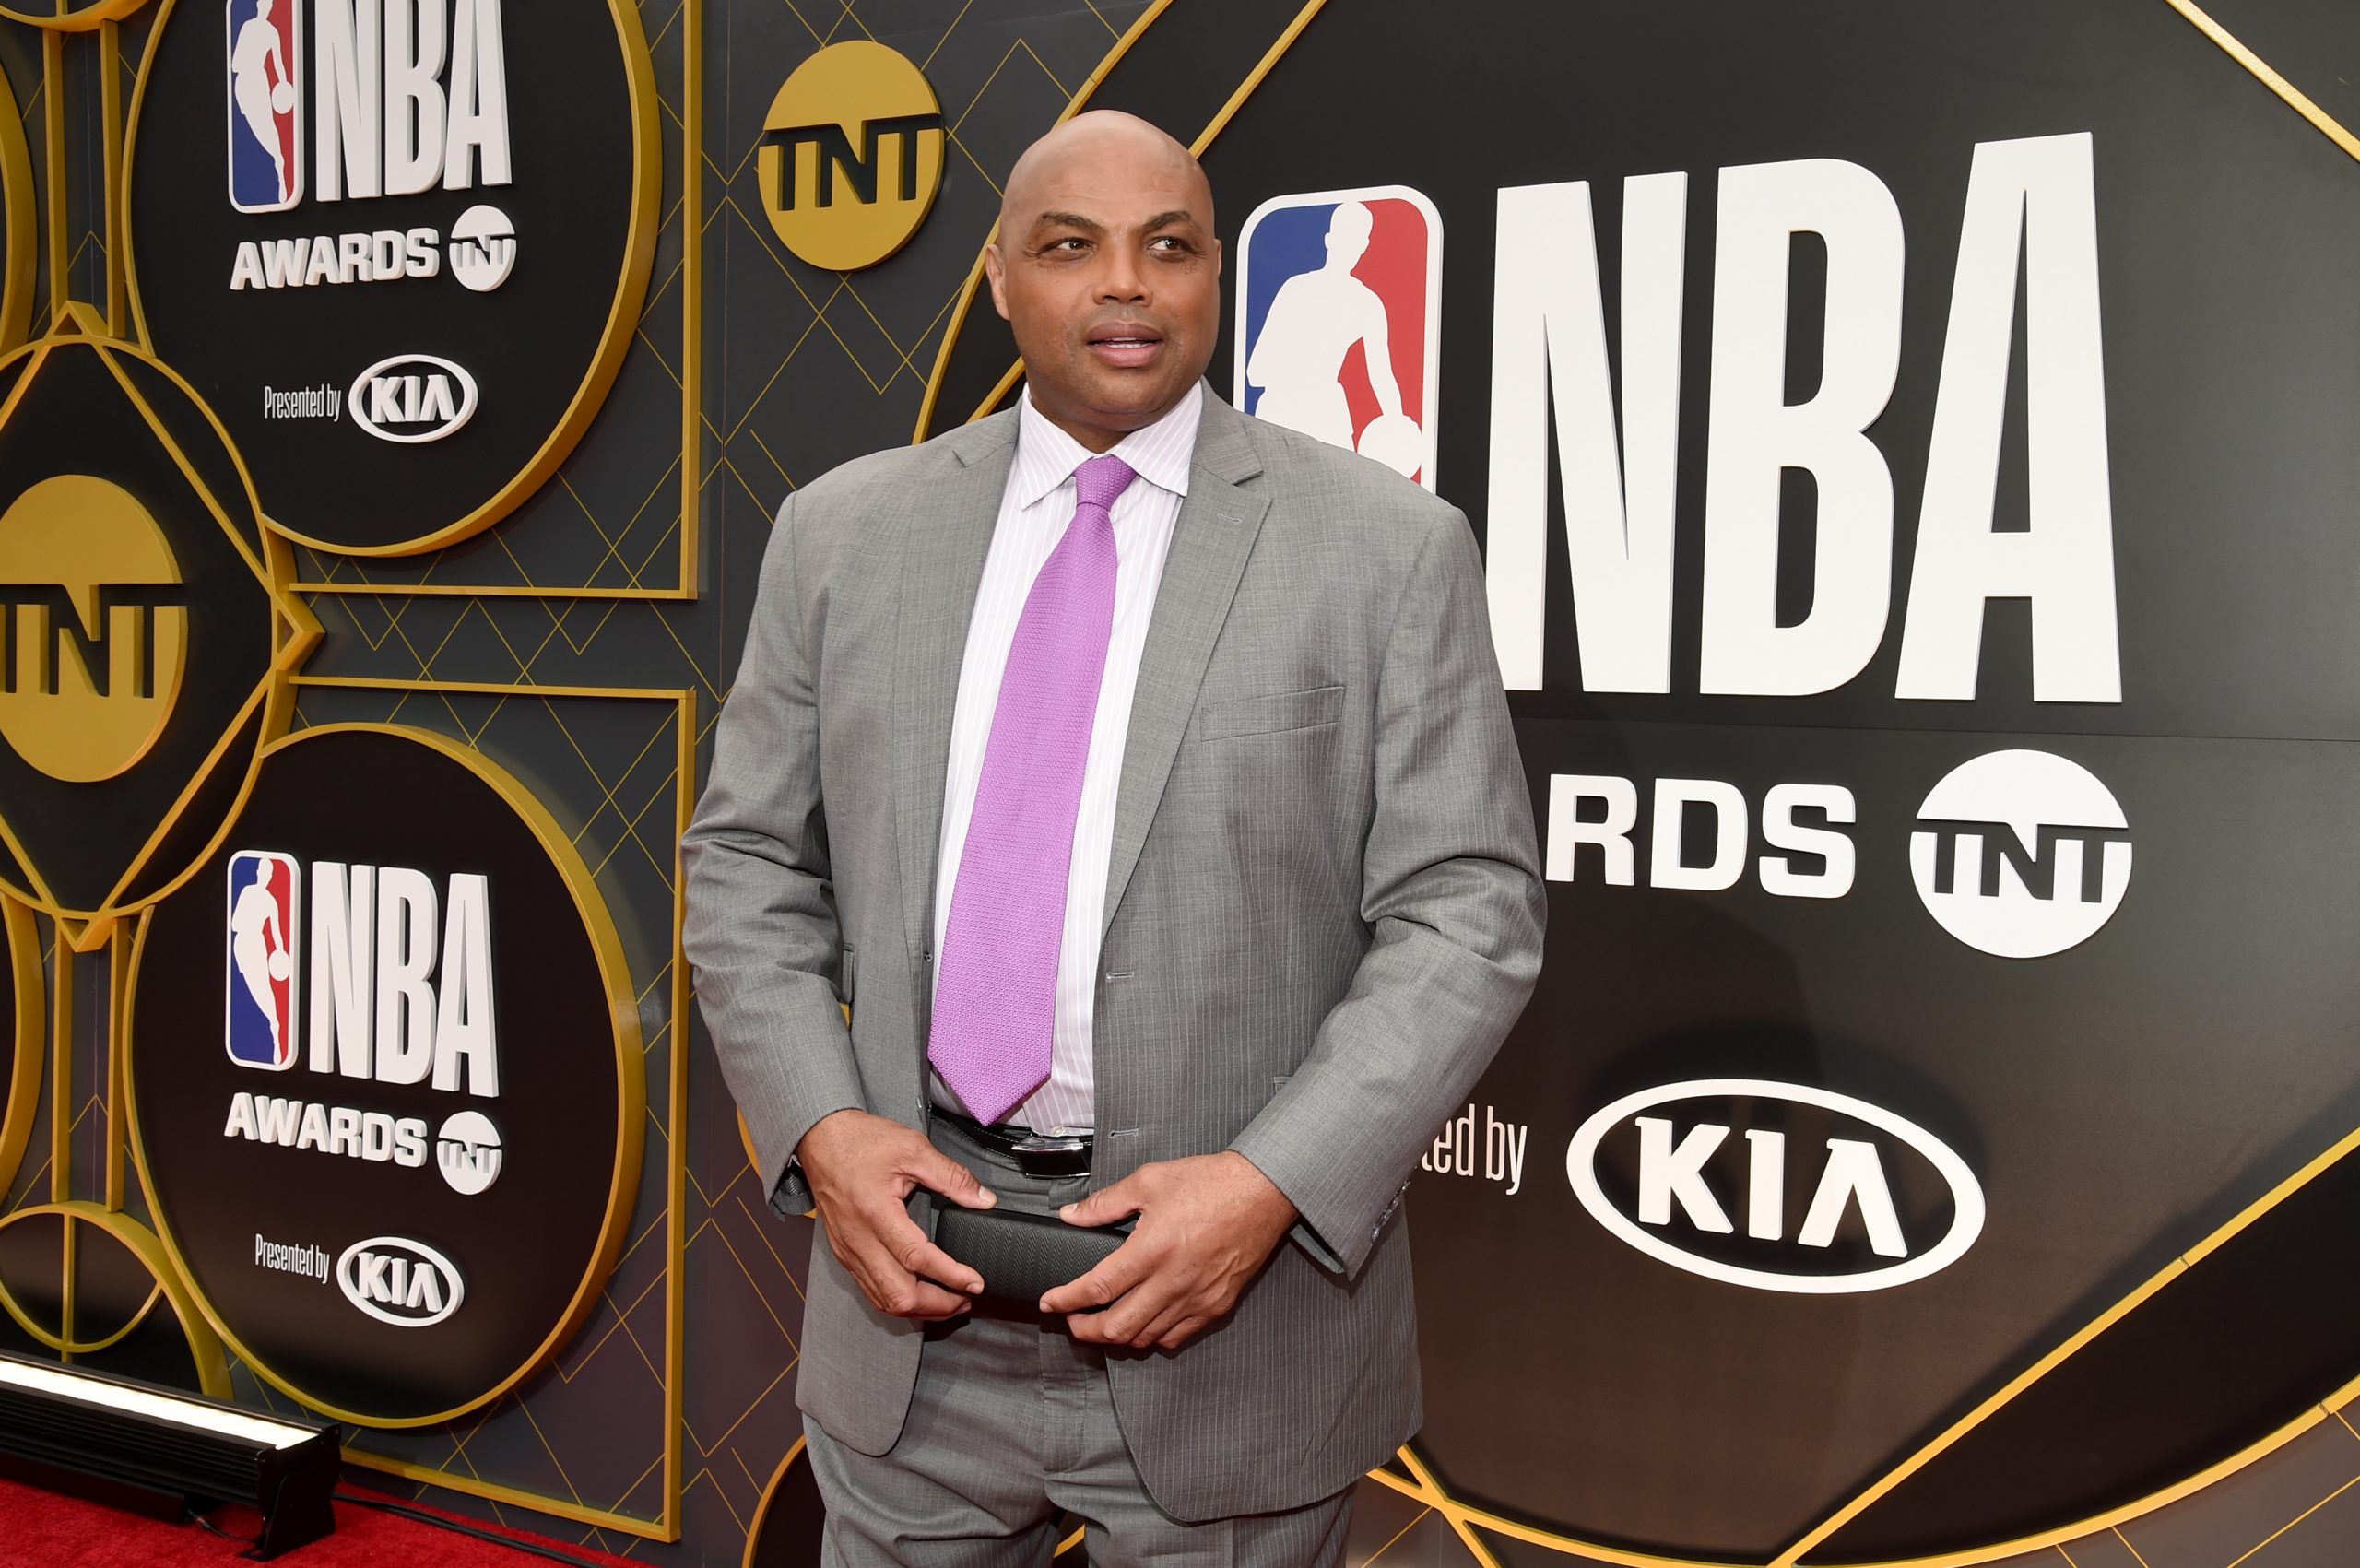 Charles Barkley poses ahead of the NBA Awards Show.